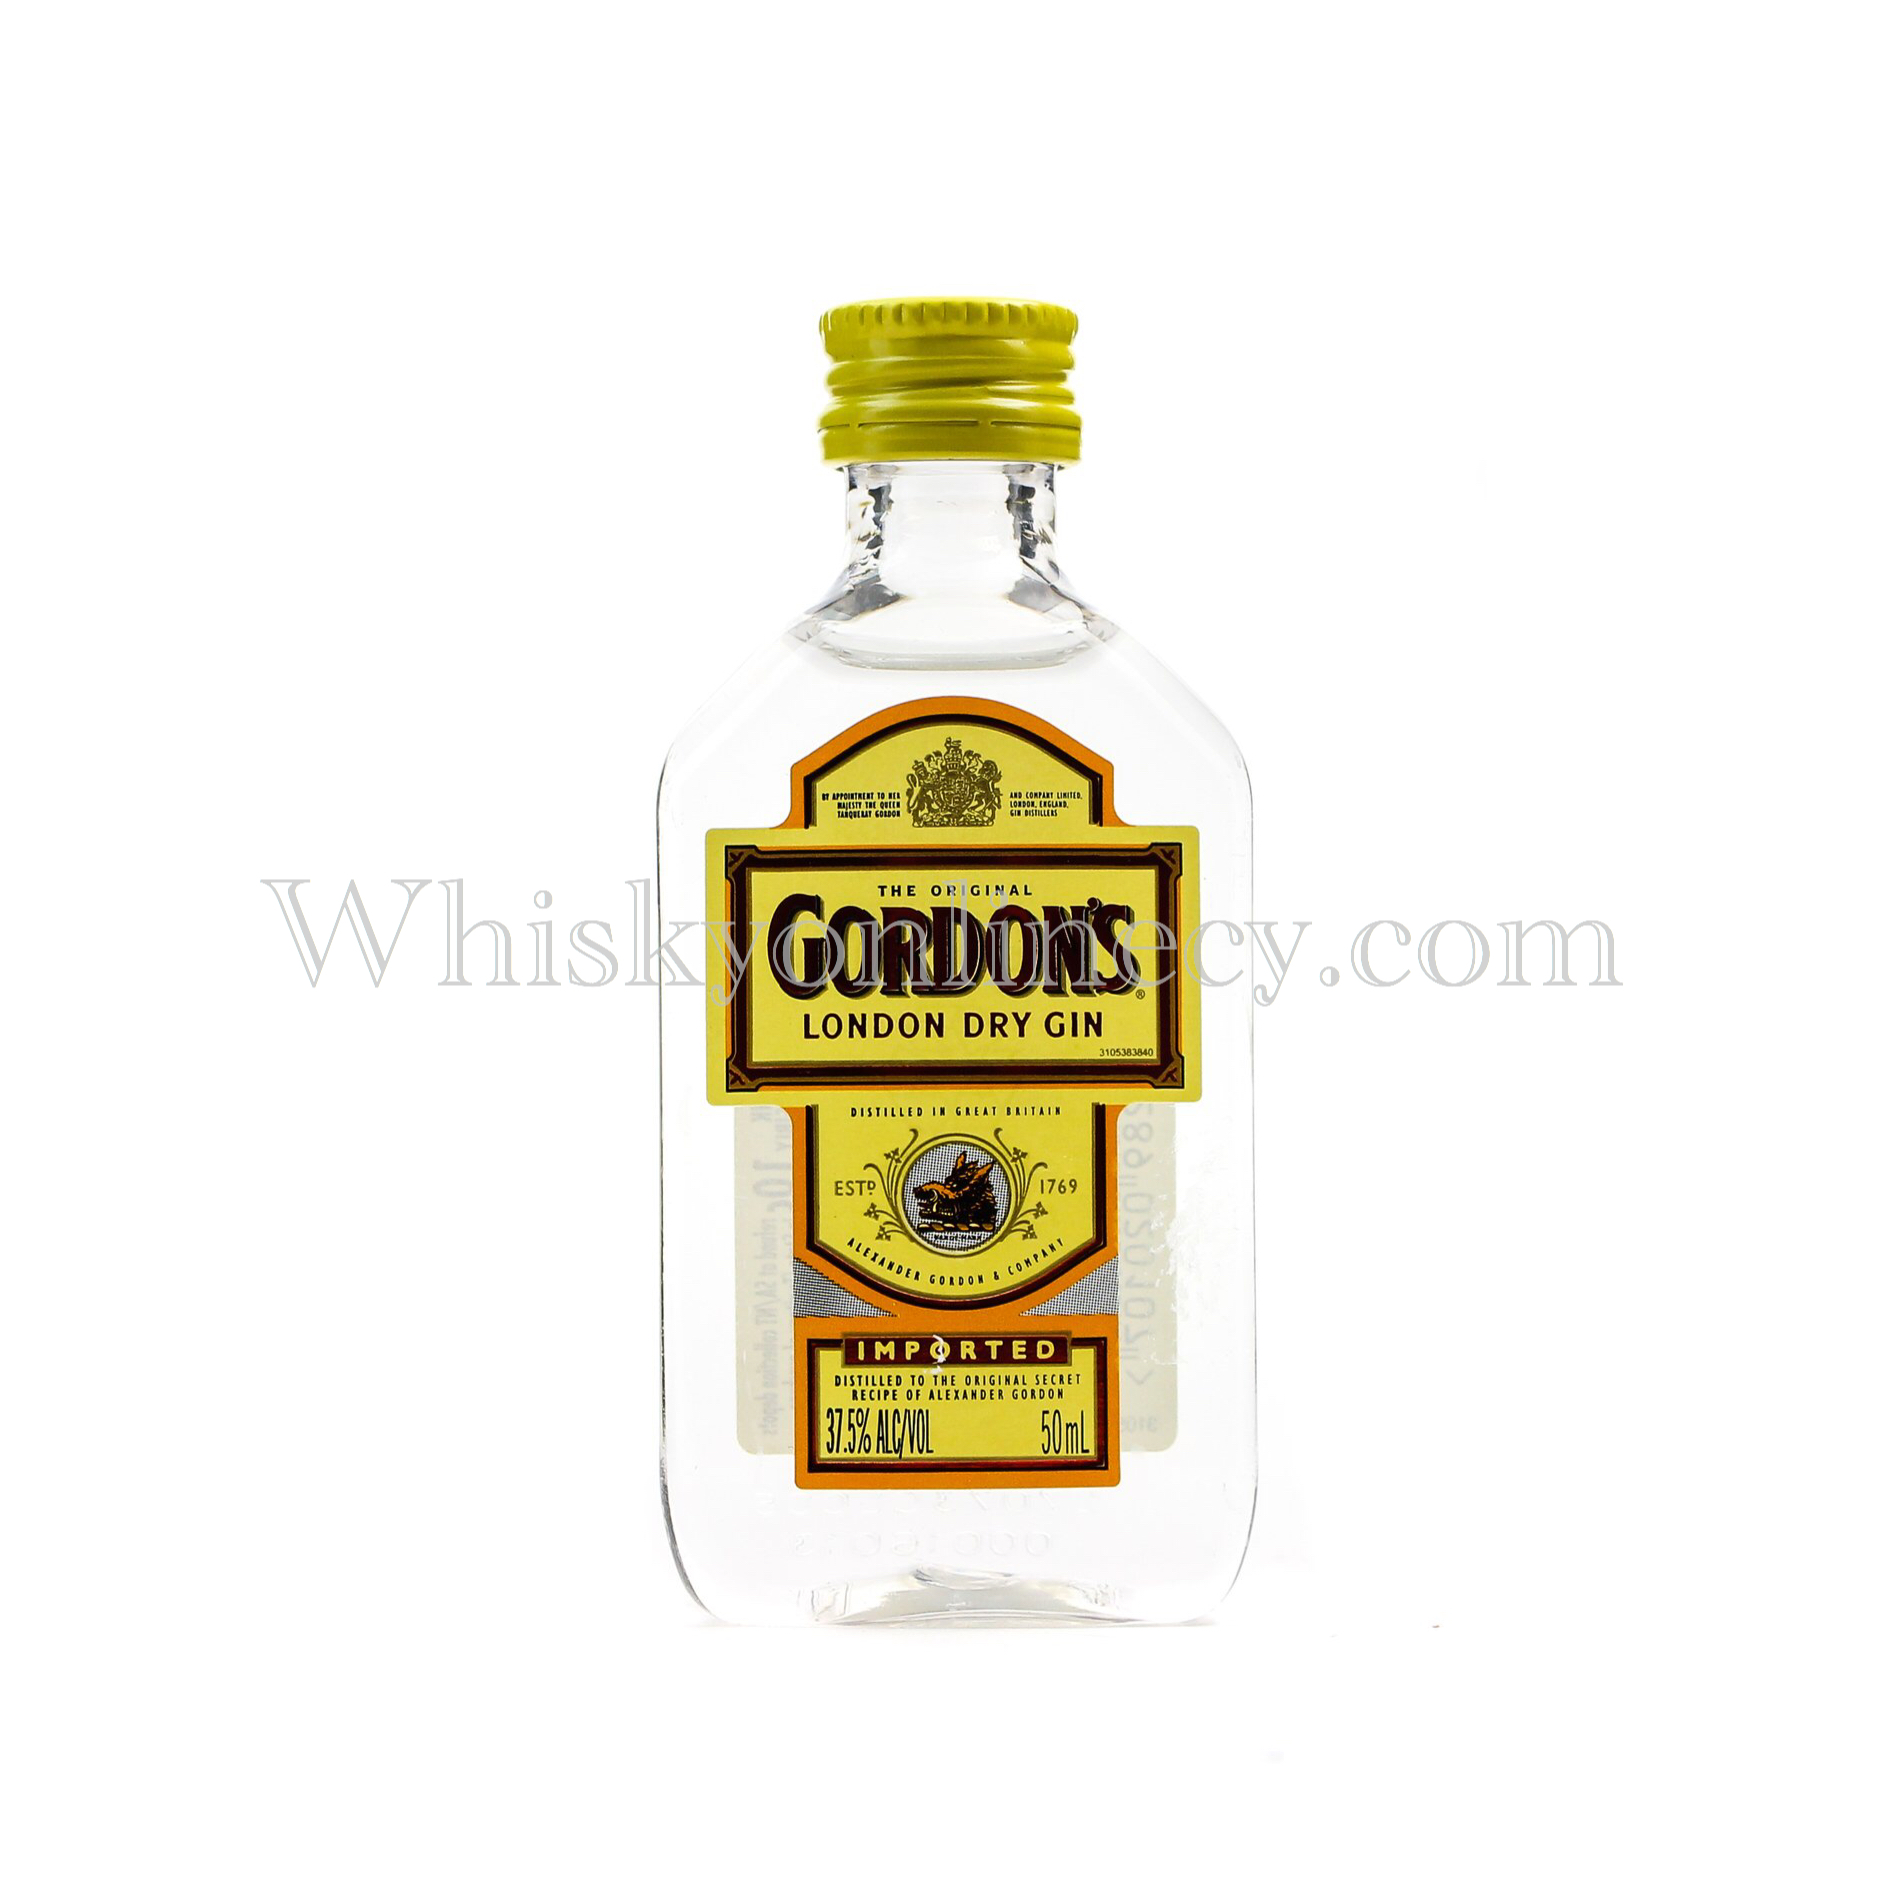 Whisky Online Cyprus - Gordons London (5cl, Dry Gin